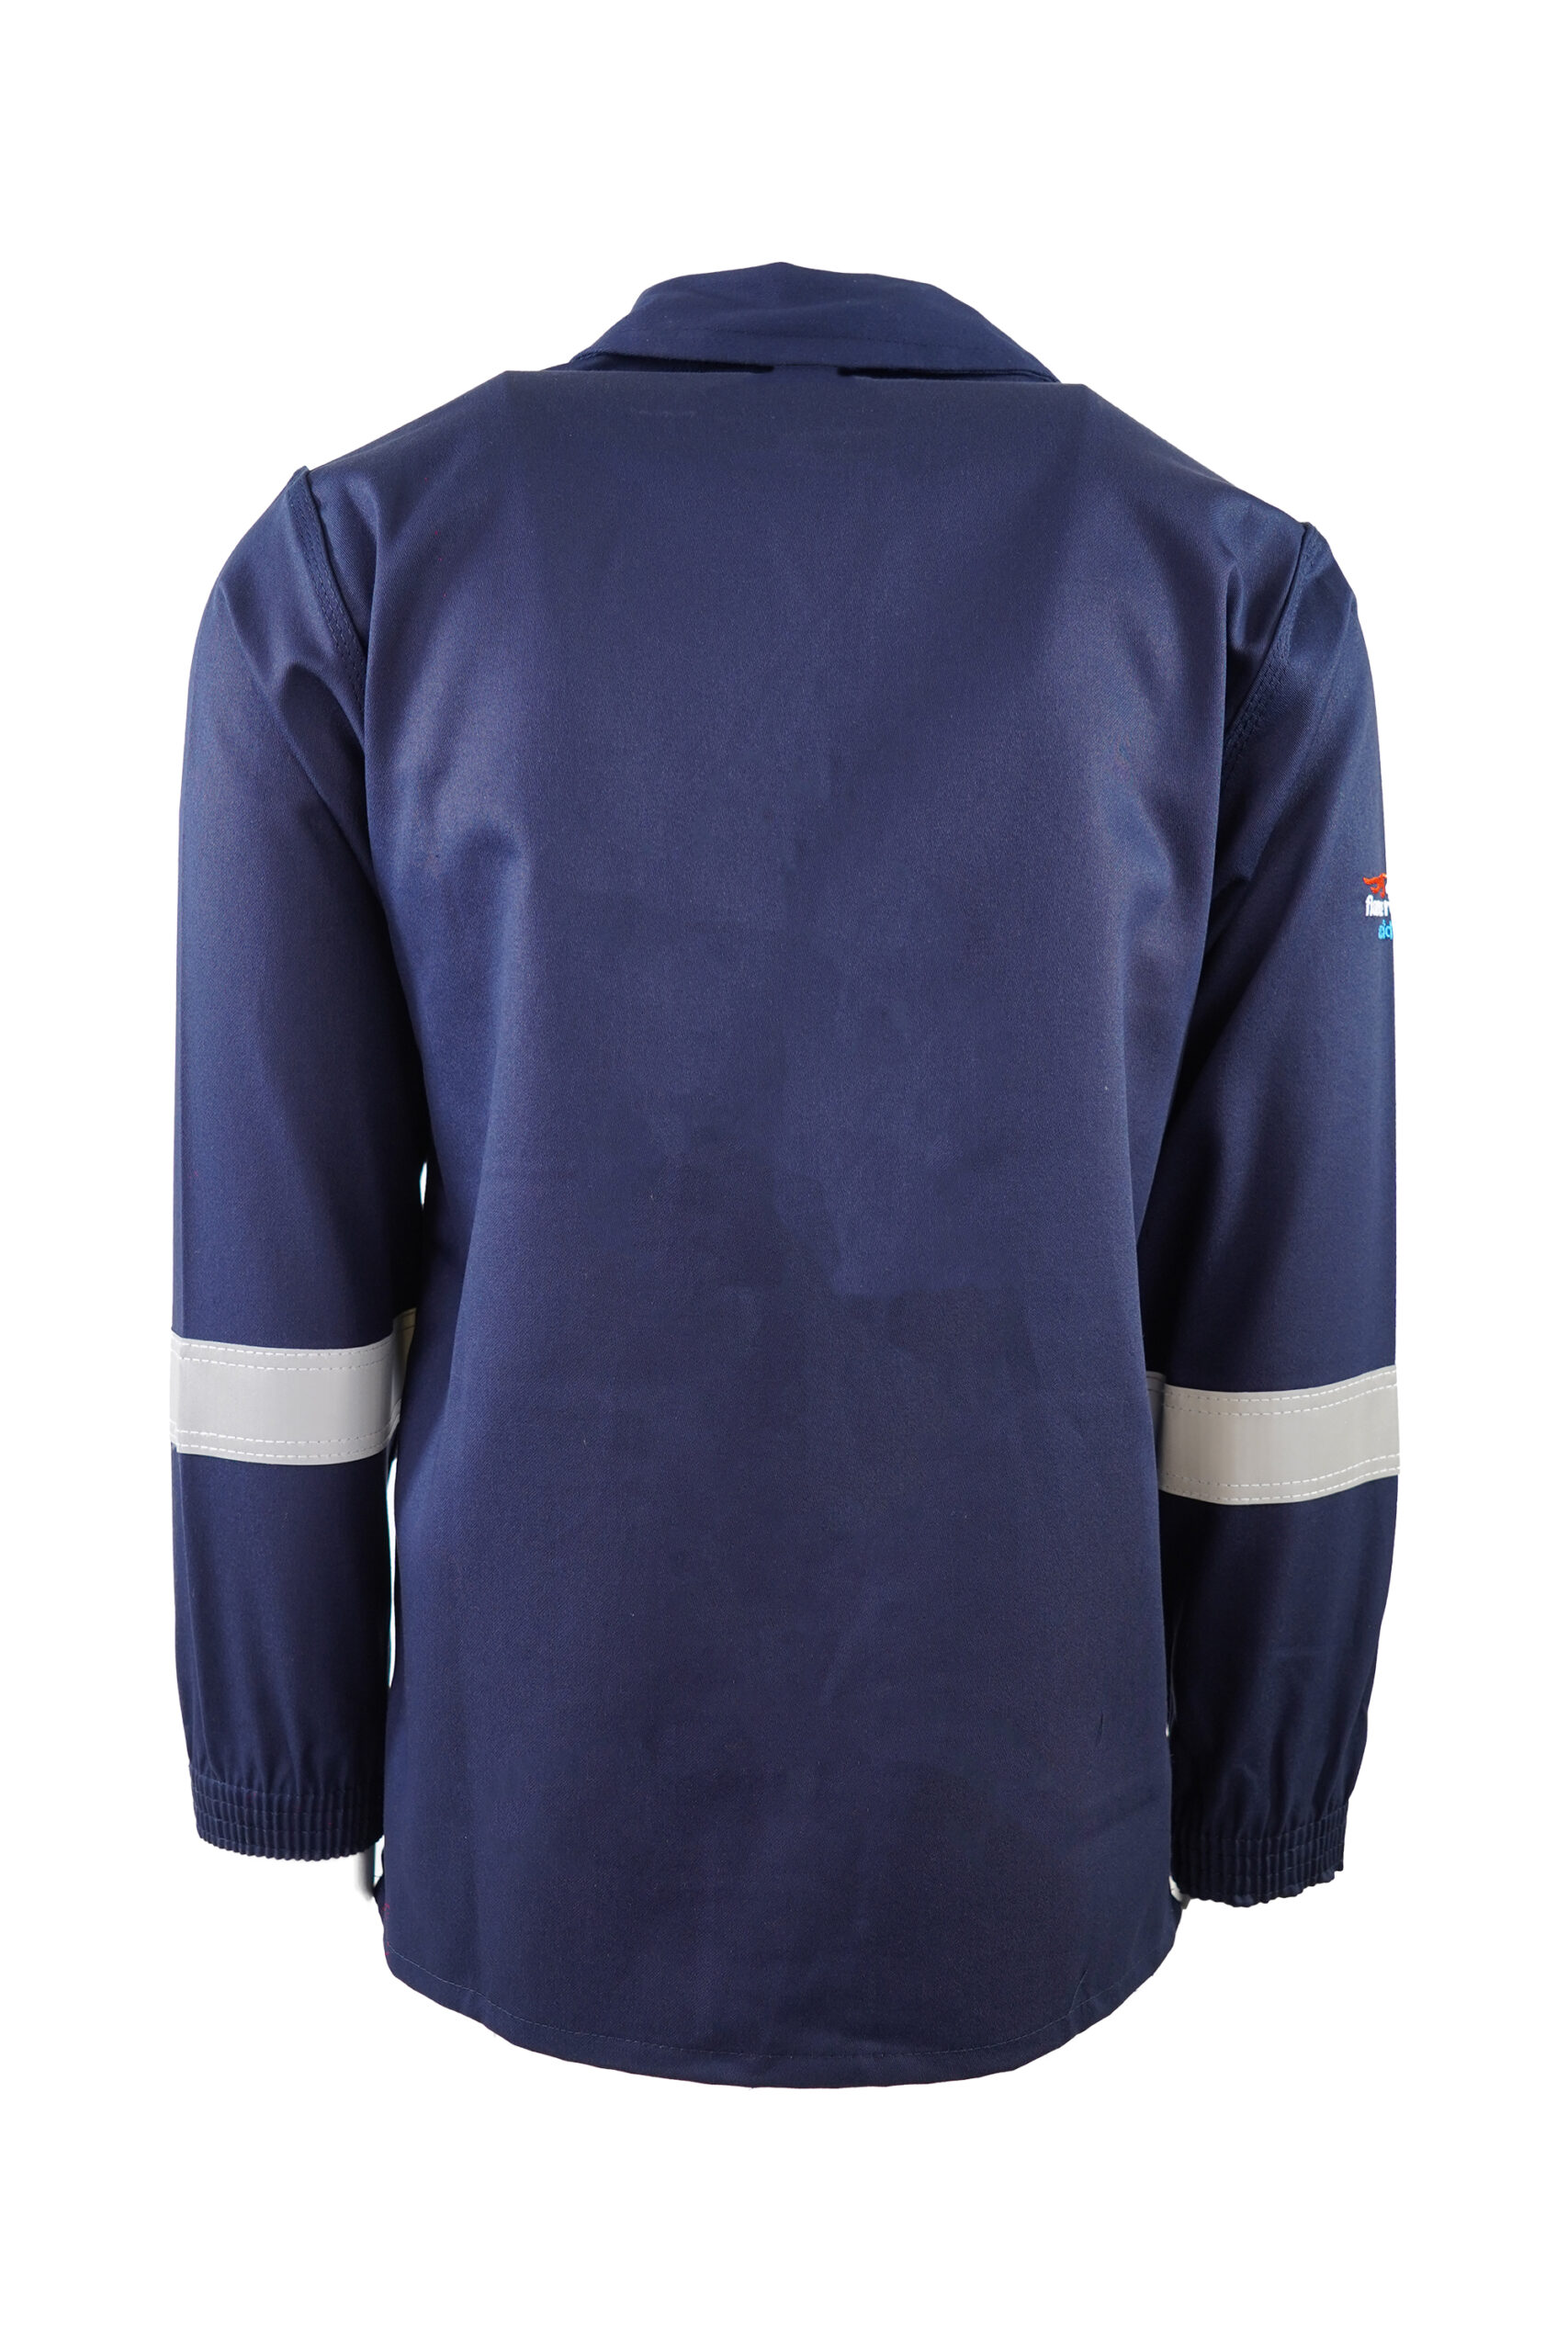 D59 Flame & Acid 100% Cotton Navy Blue Conti Jacket - Endurance Workwear